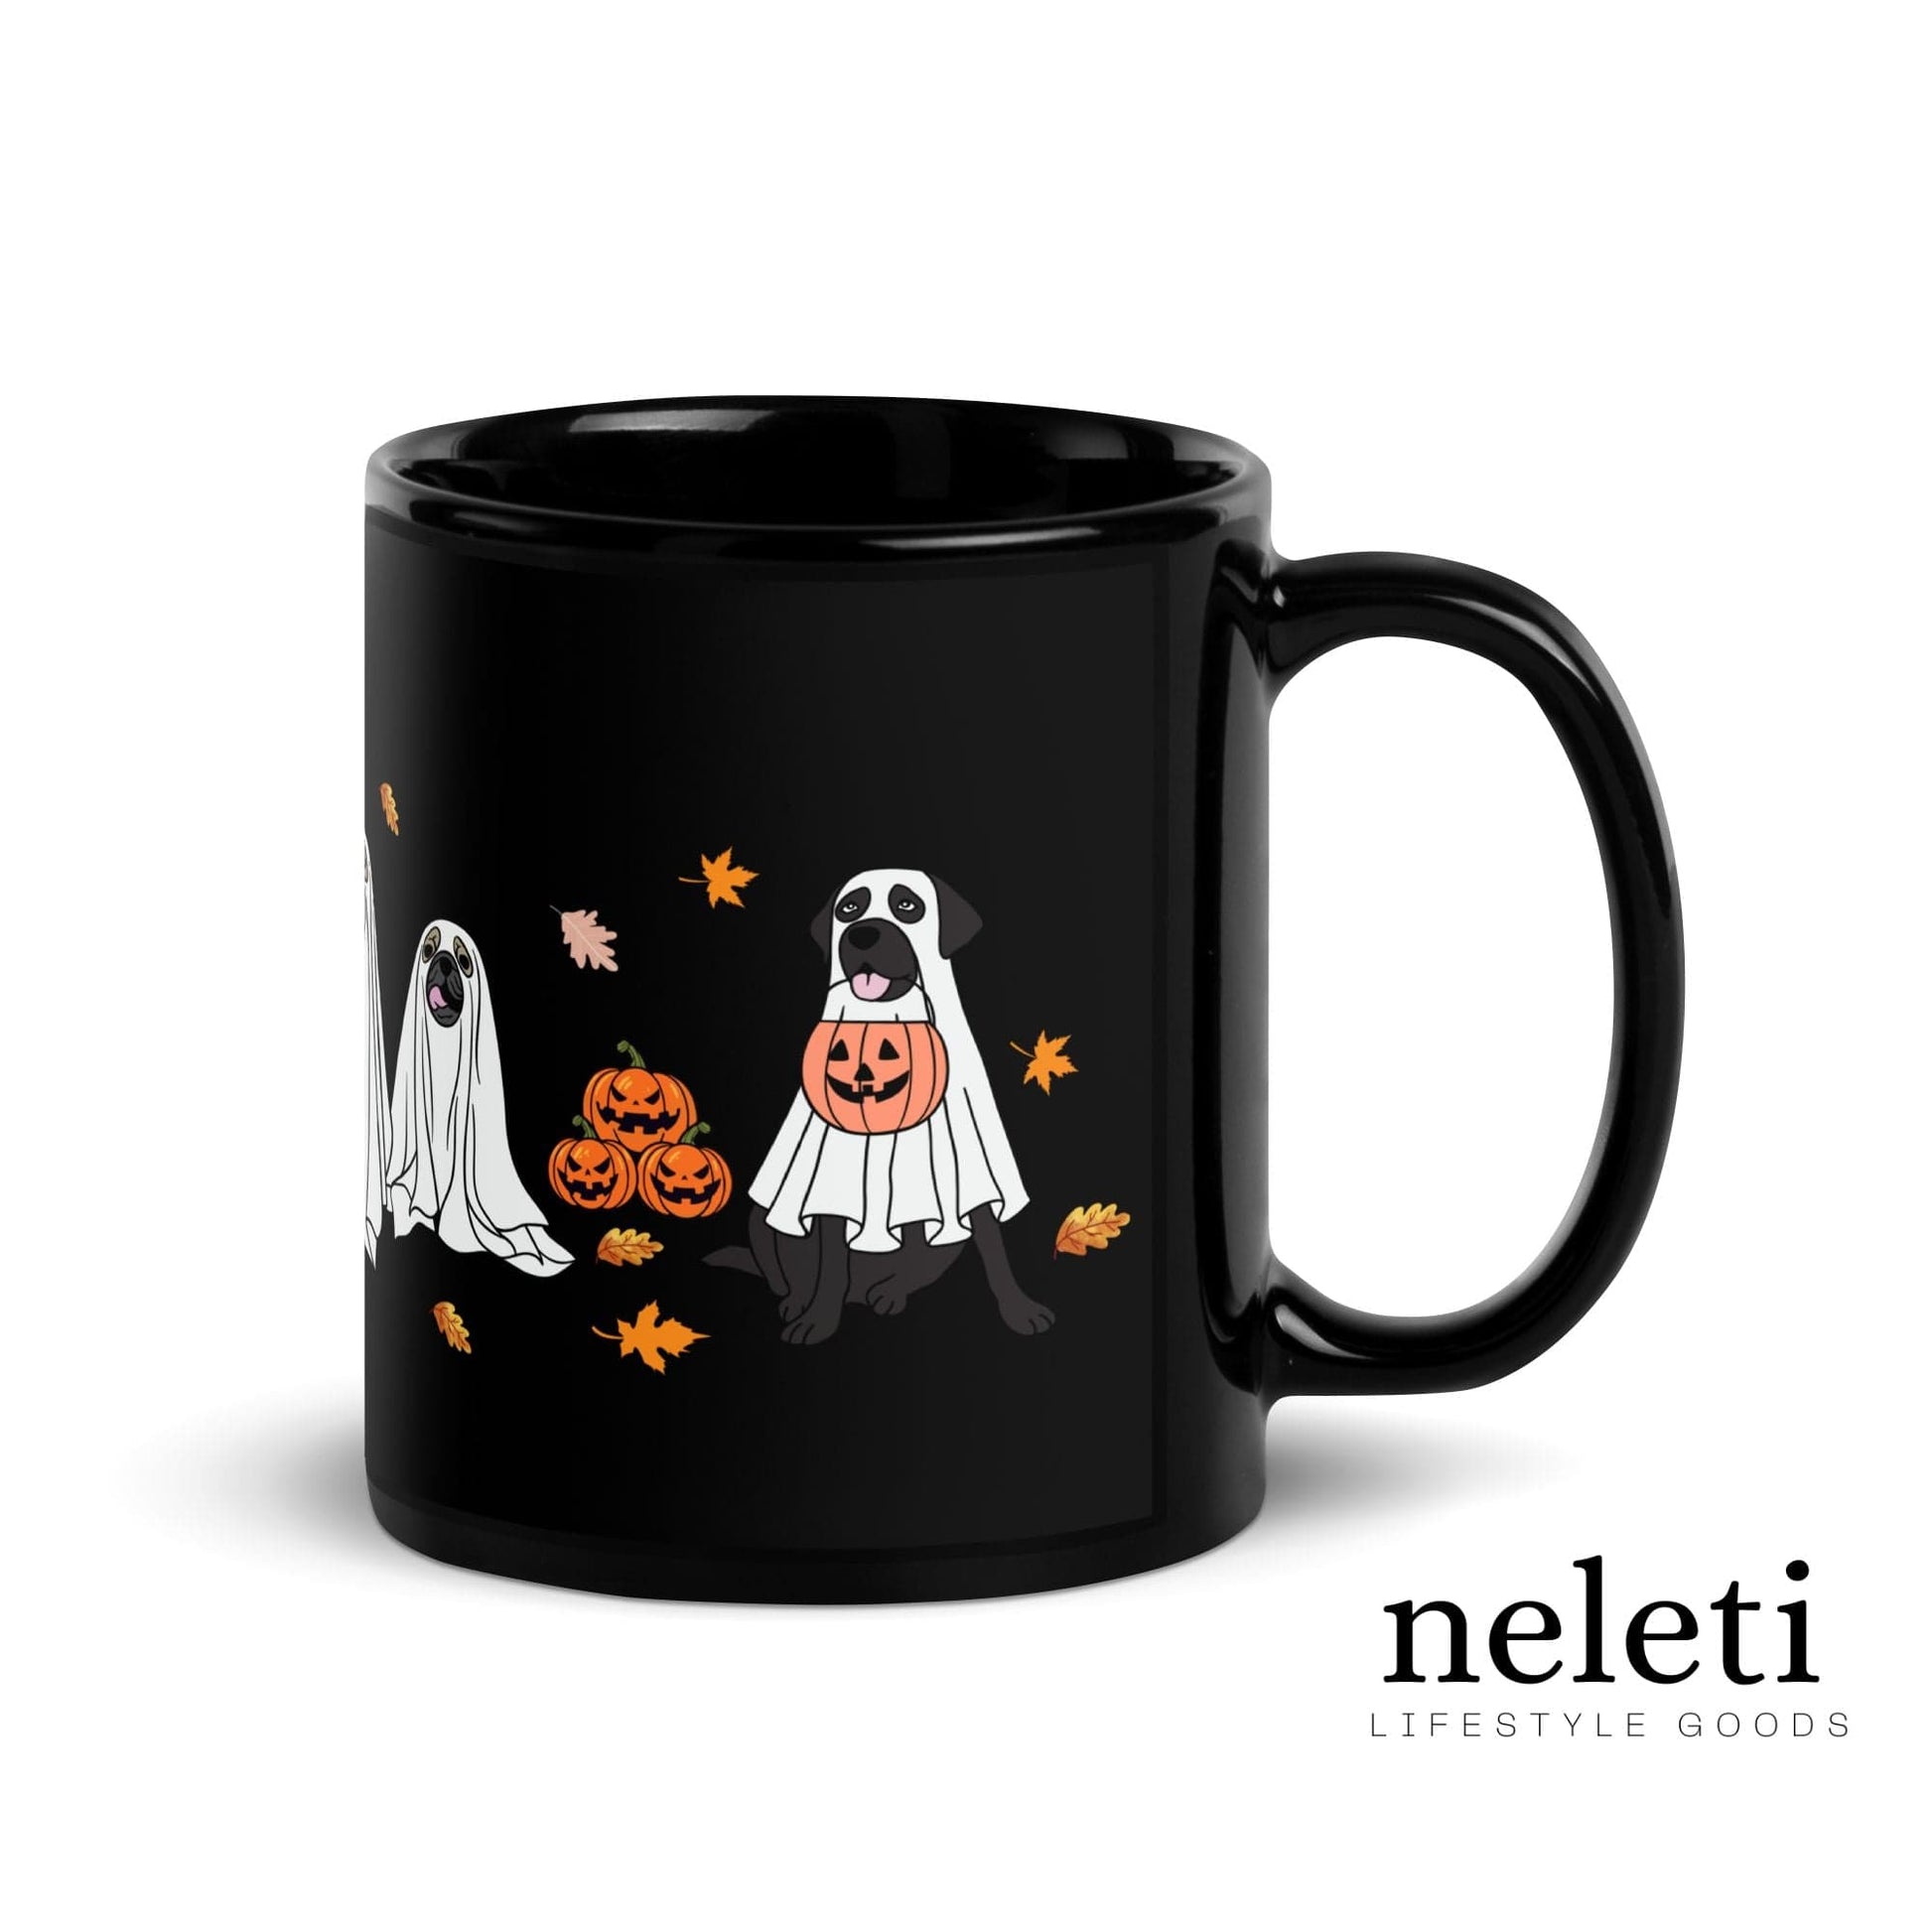 neleti.com-haloween-mug-for-dog-lovers